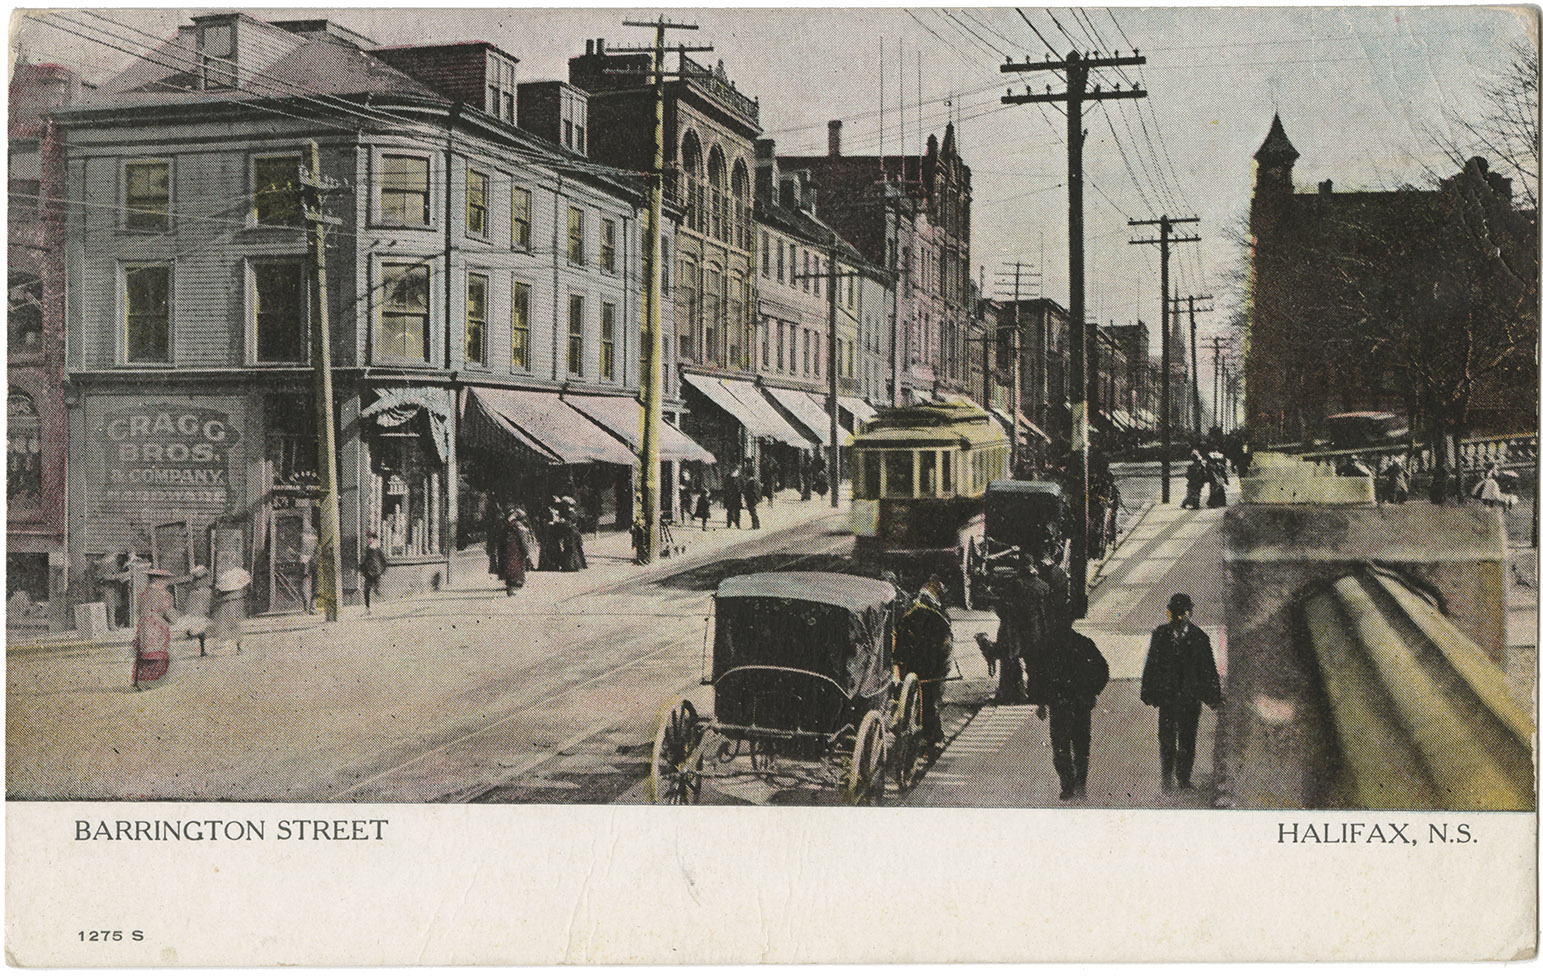 communityalbums - Barrington Street, Halifax, N.S.